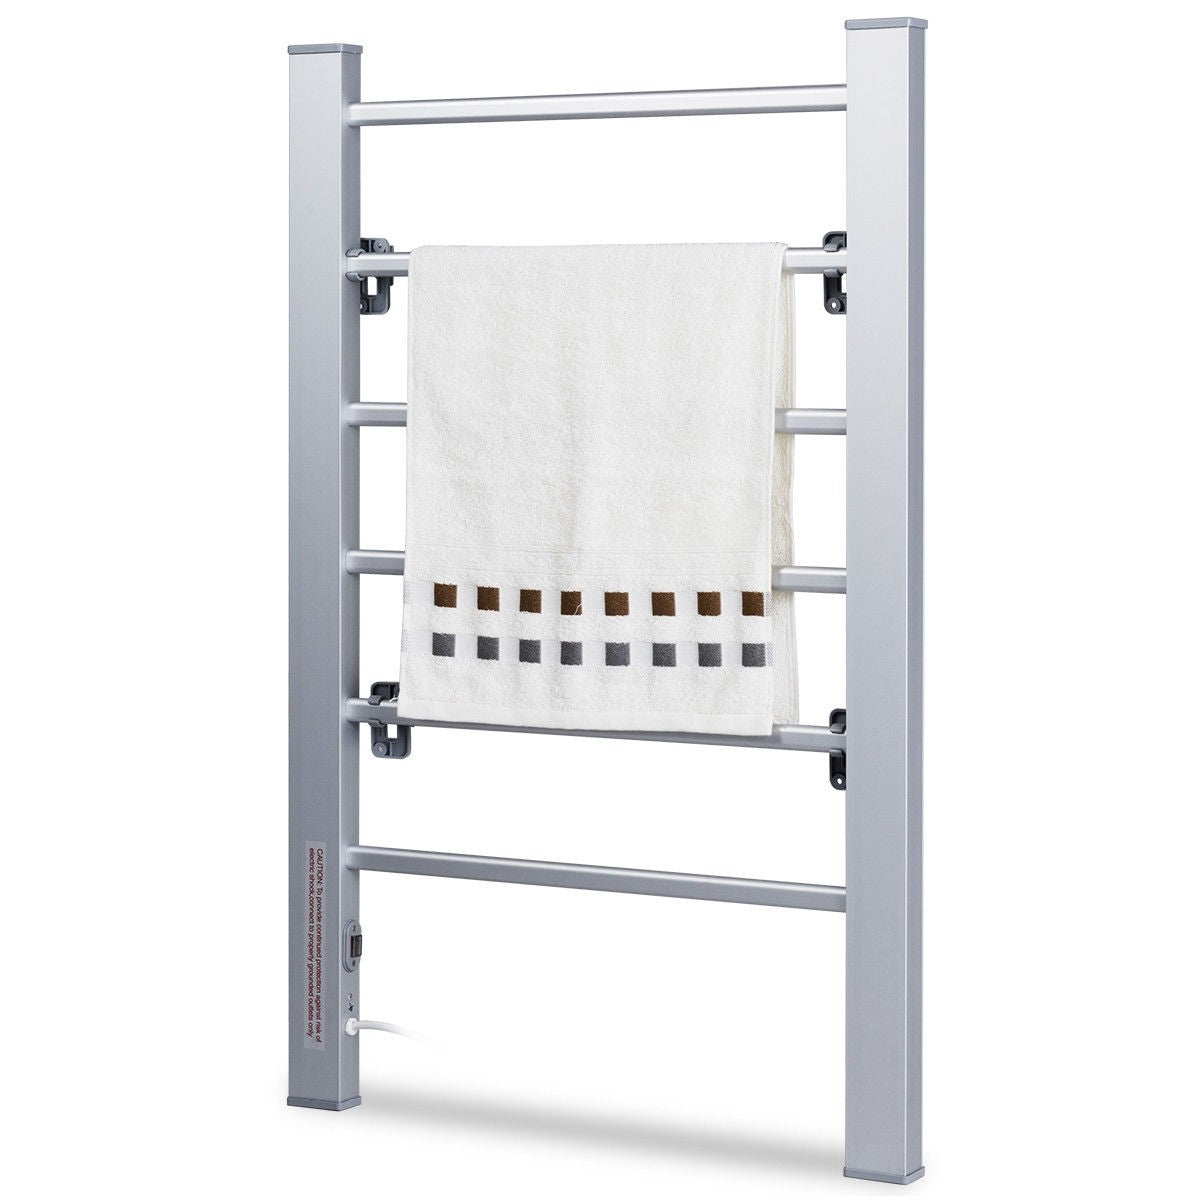 2-in-1 Freestanding Wall Mounted Electric Towel Warmer and Bathroom Towel or Bathing Robe Rack